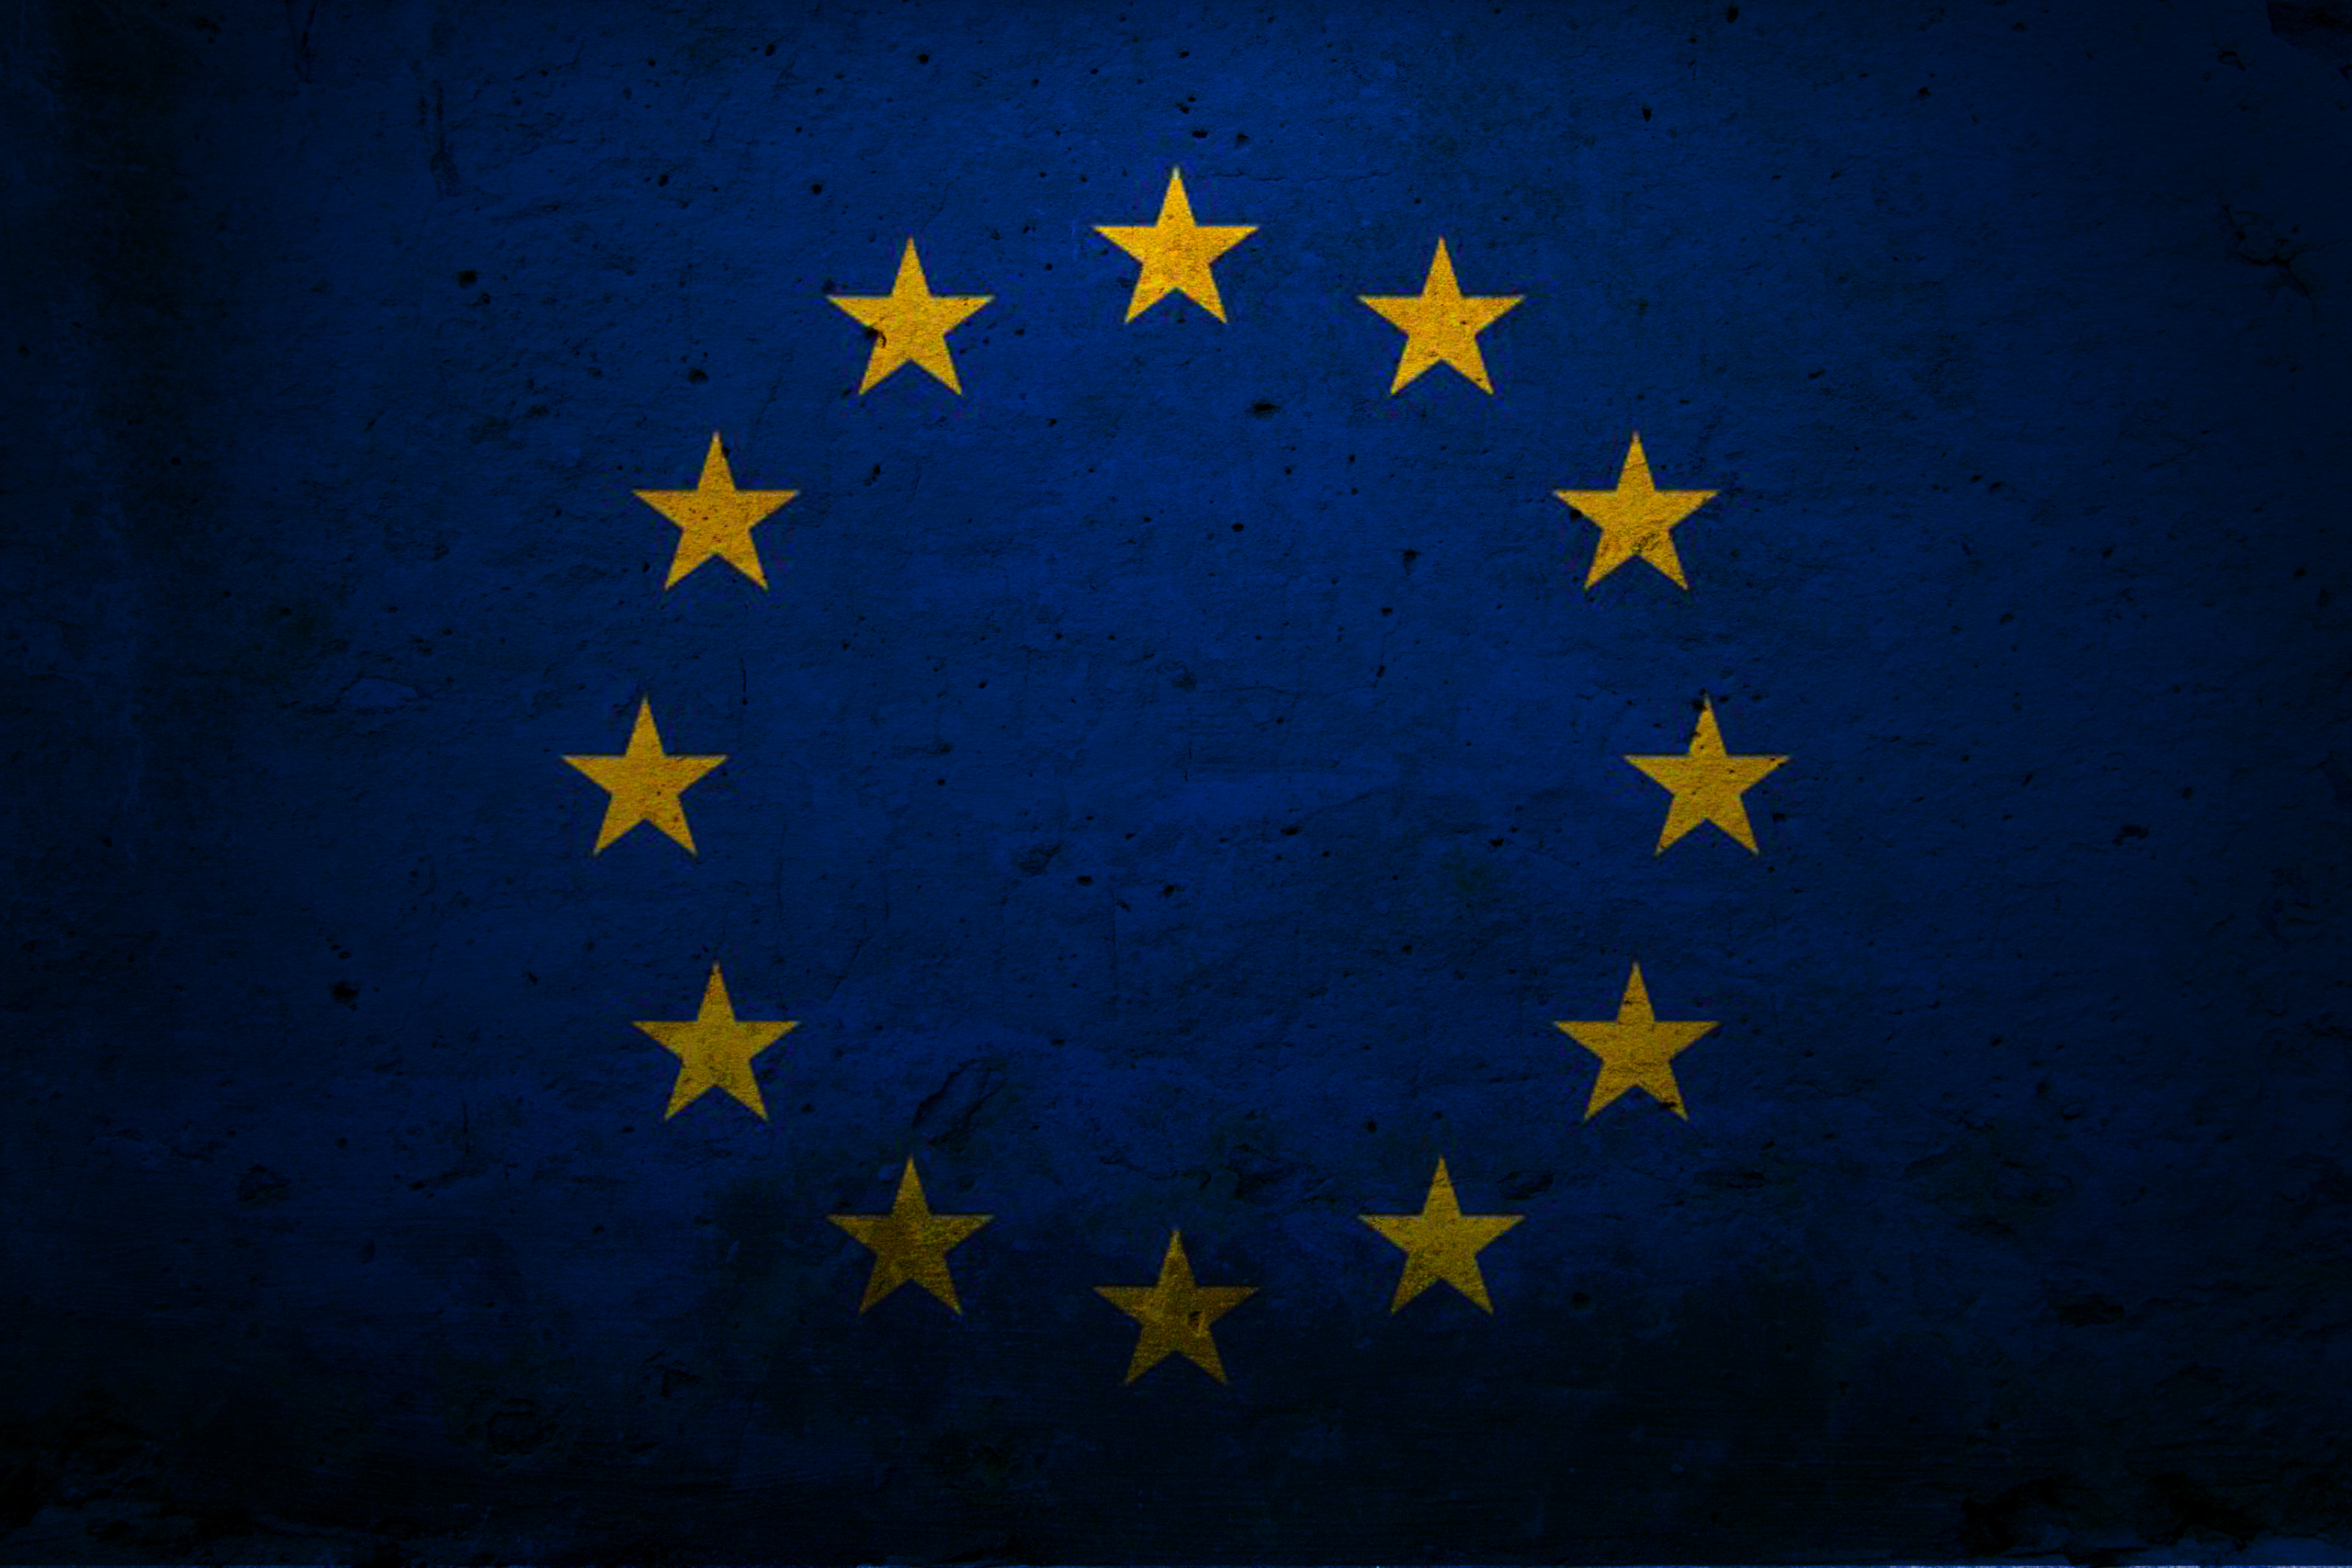 General 2560x1707 flag European Union grunge stars simple background minimalism